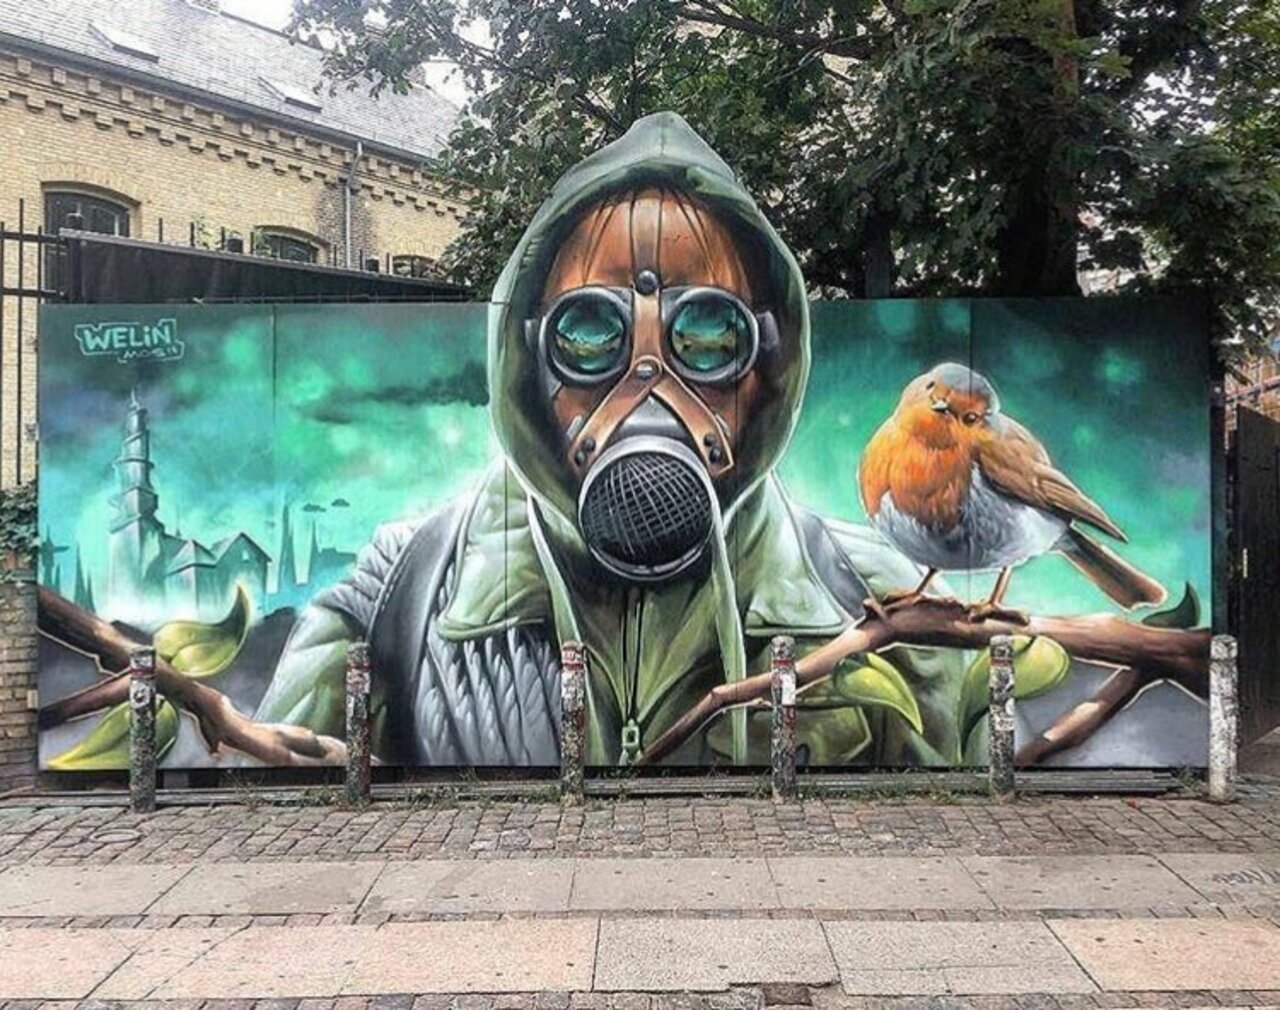 By Welin in Copenhagen, Denmark#art #graffiti #mural #streetart https://t.co/mtvfud7llR